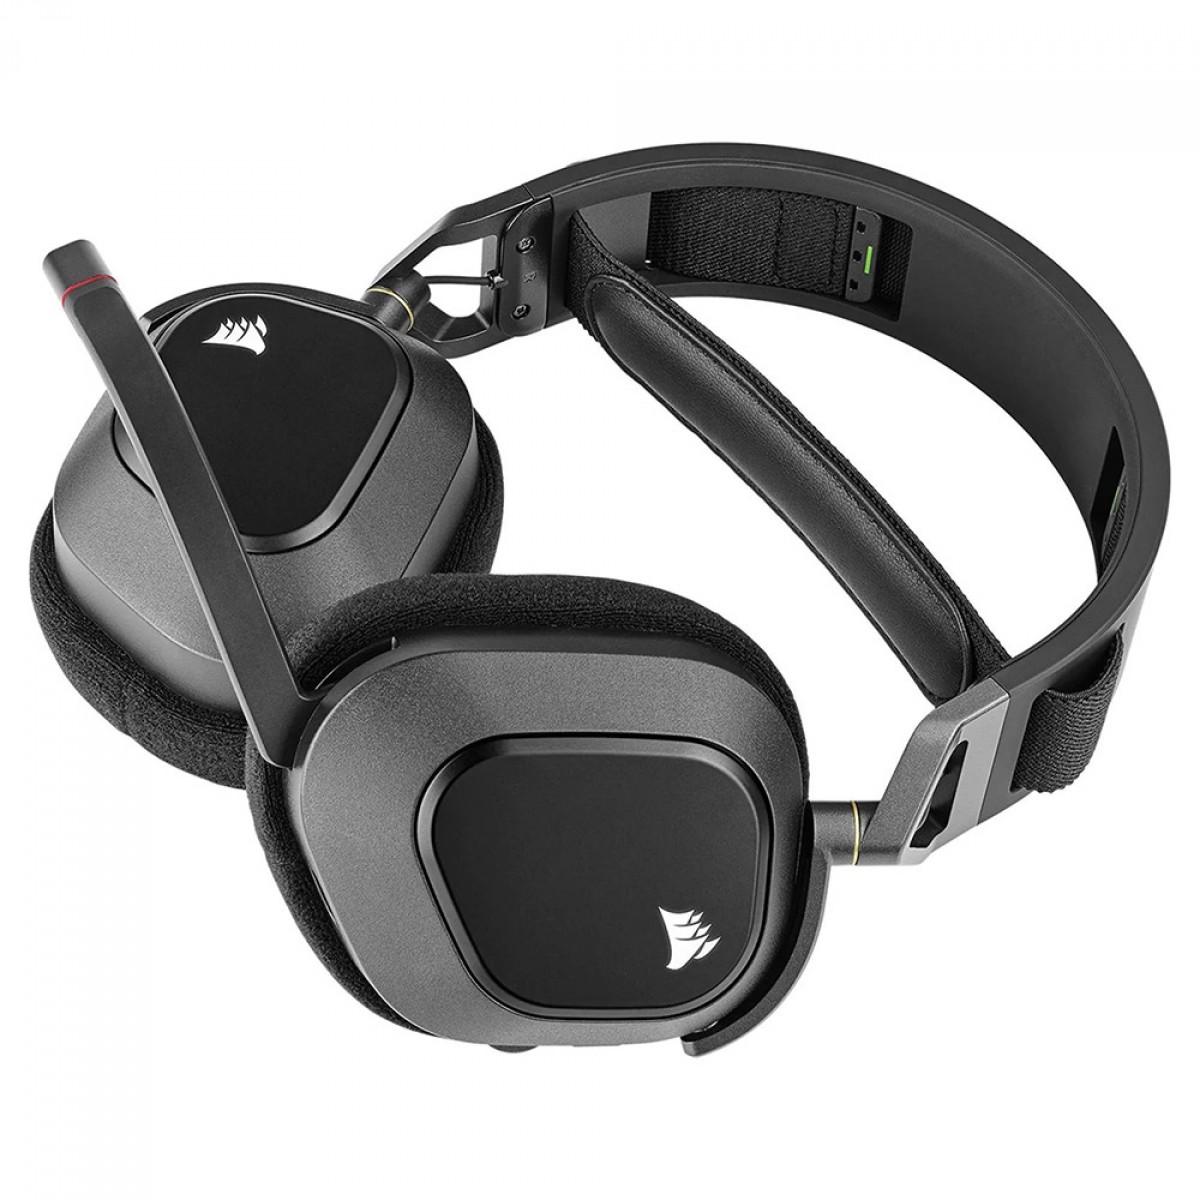 Headset Gamer Corsair HS80 Premium, RGB, Surround, Wireless, Dolby Atmos, Drivers 50mm, Preto, CA-9011235-NA